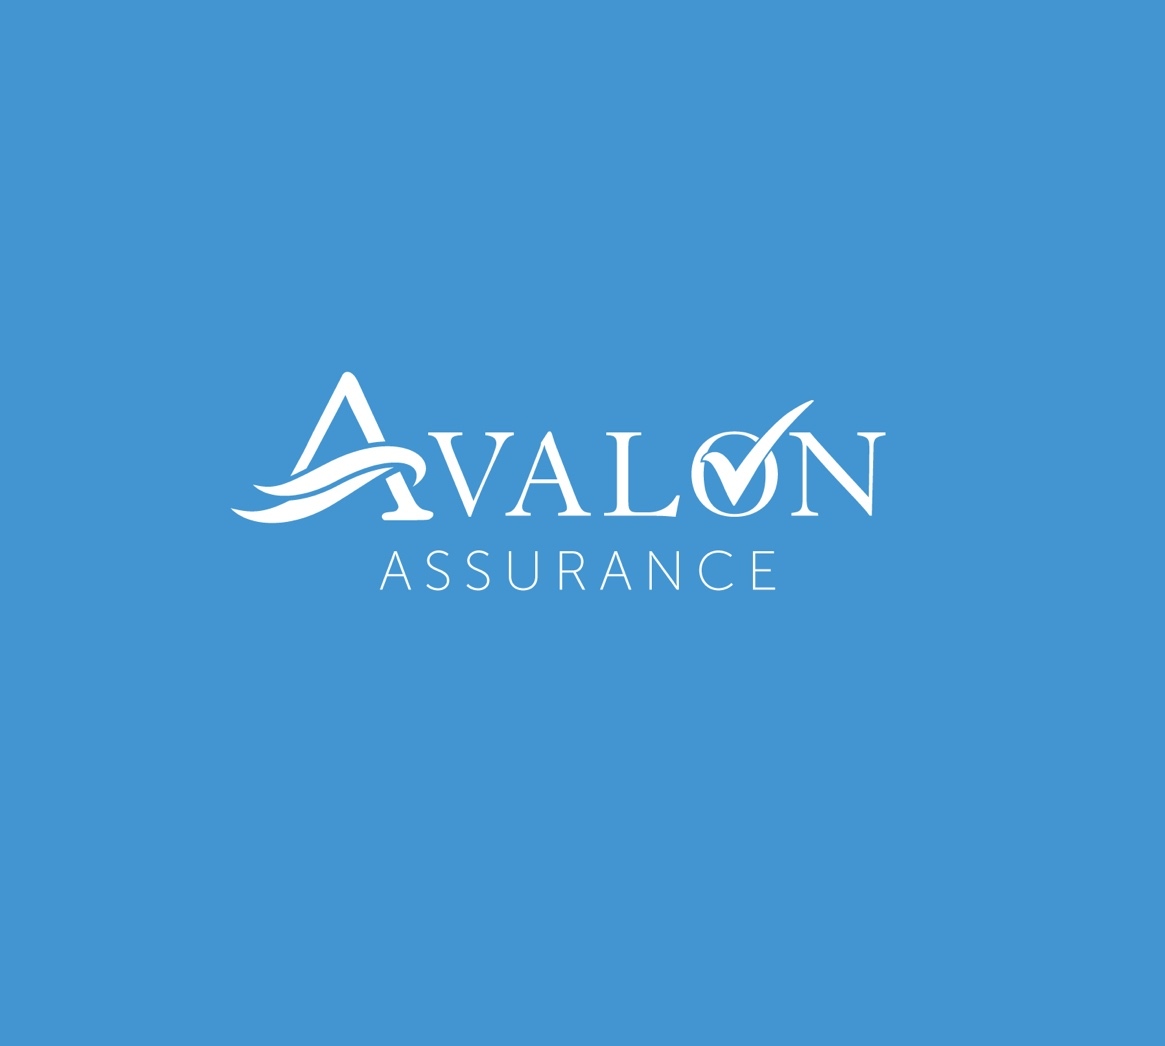 Avalon Assurance